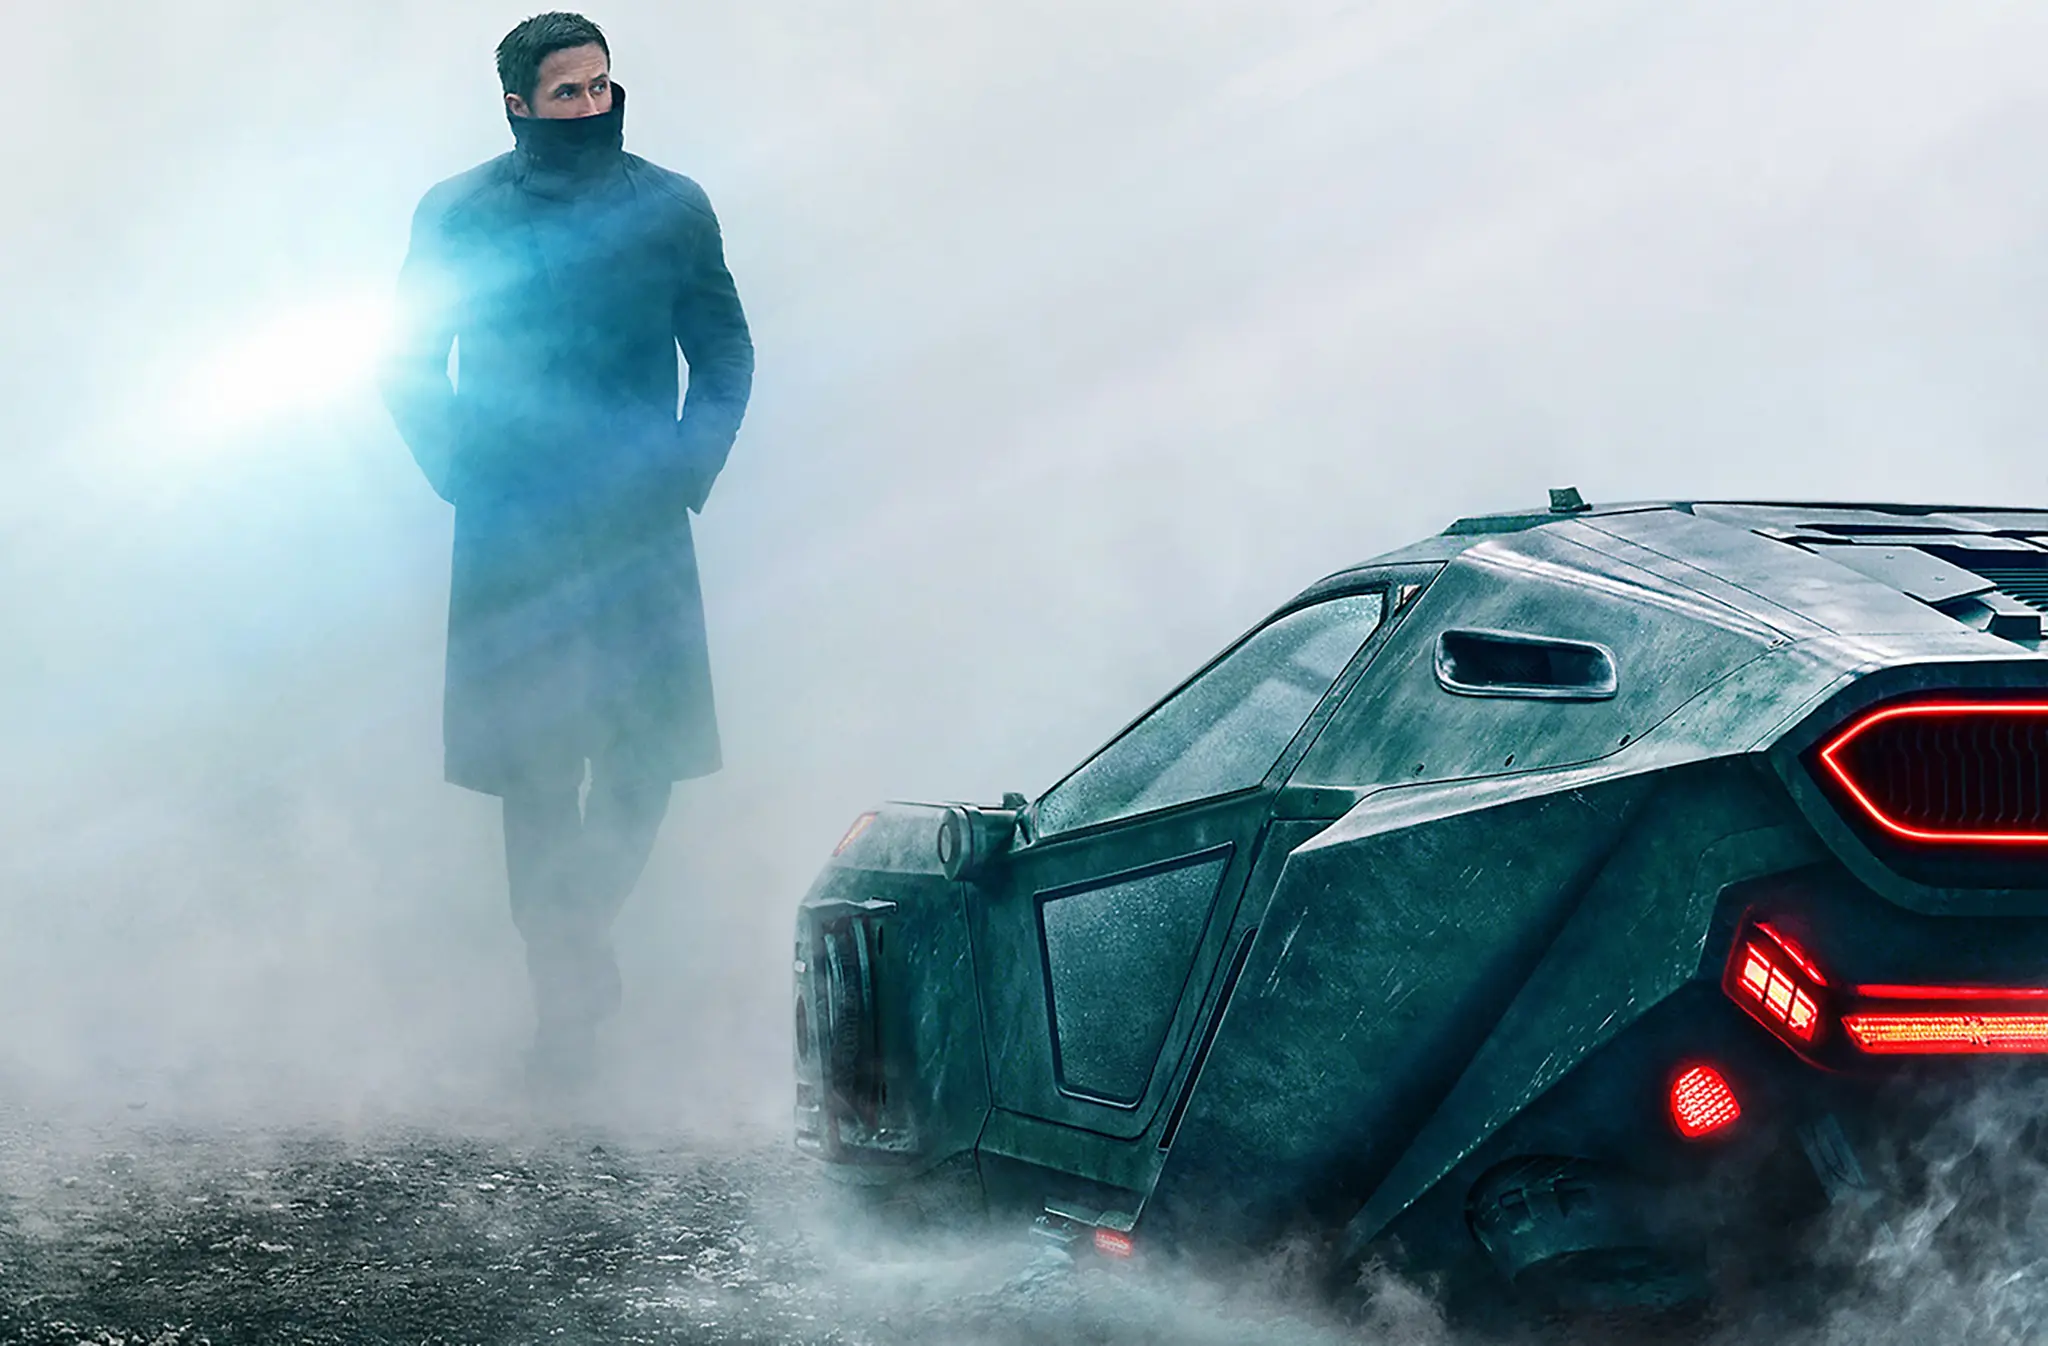 Sci-fi Blade Runner 2049 vládne českým kinům. ALE...?